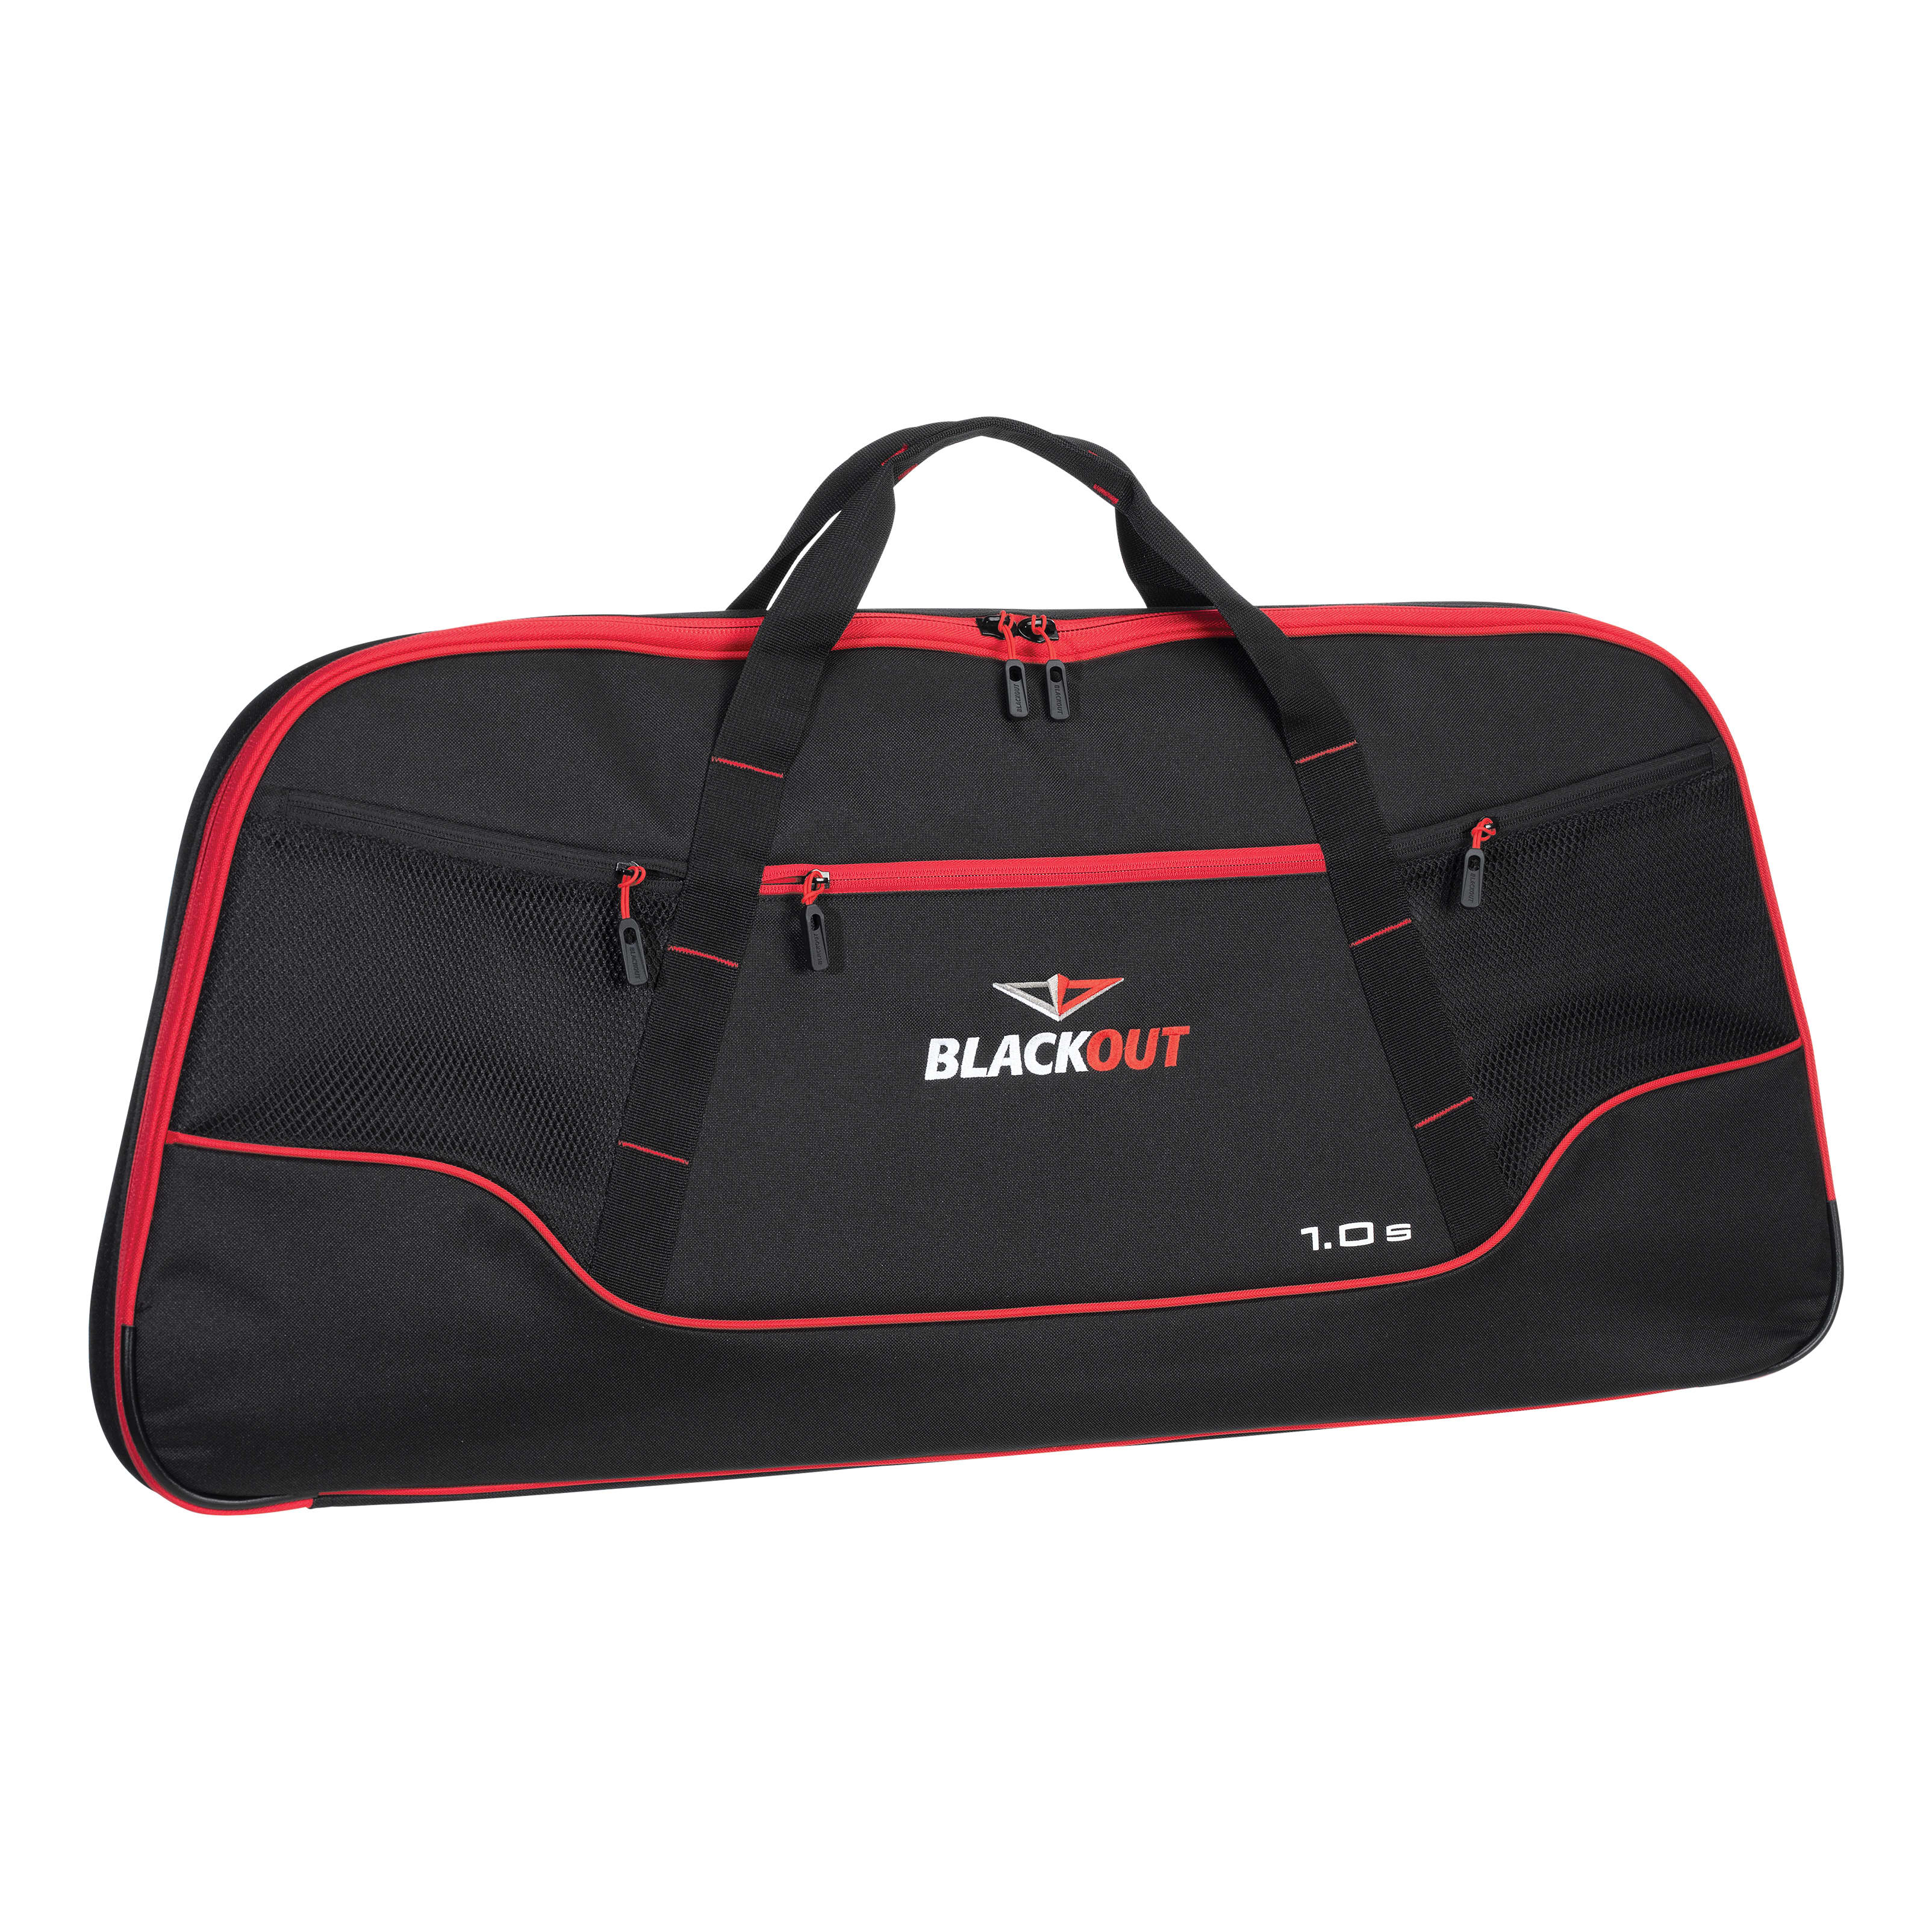 BlackOut® 1.0S Compound-Bow Case - Black/Red